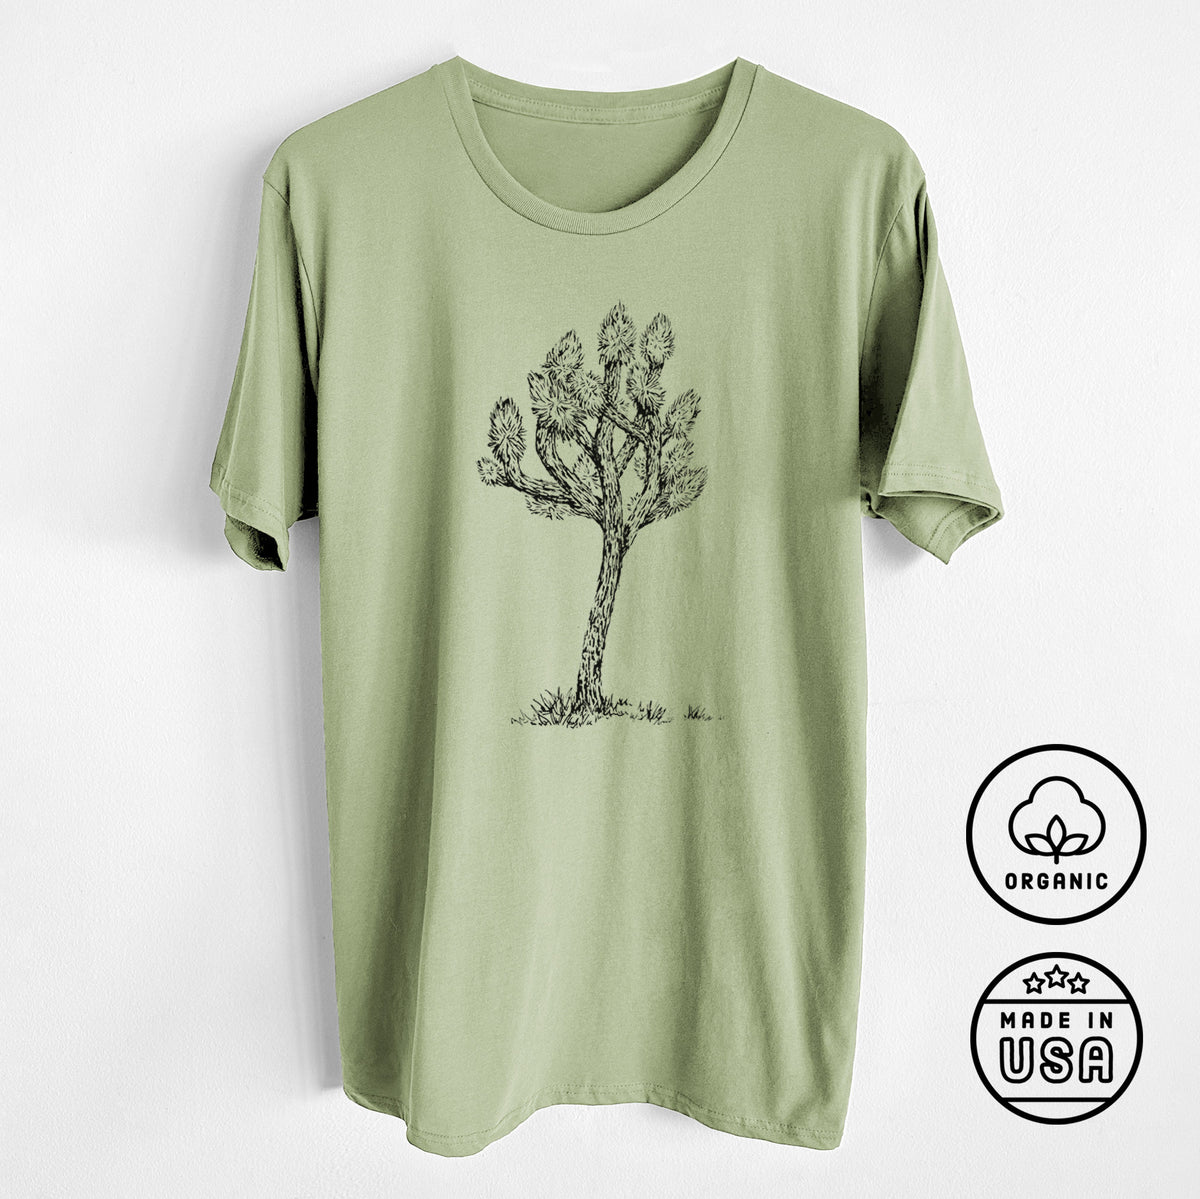 Yucca brevifolia - Joshua Tree - Unisex Crewneck - Made in USA - 100% Organic Cotton